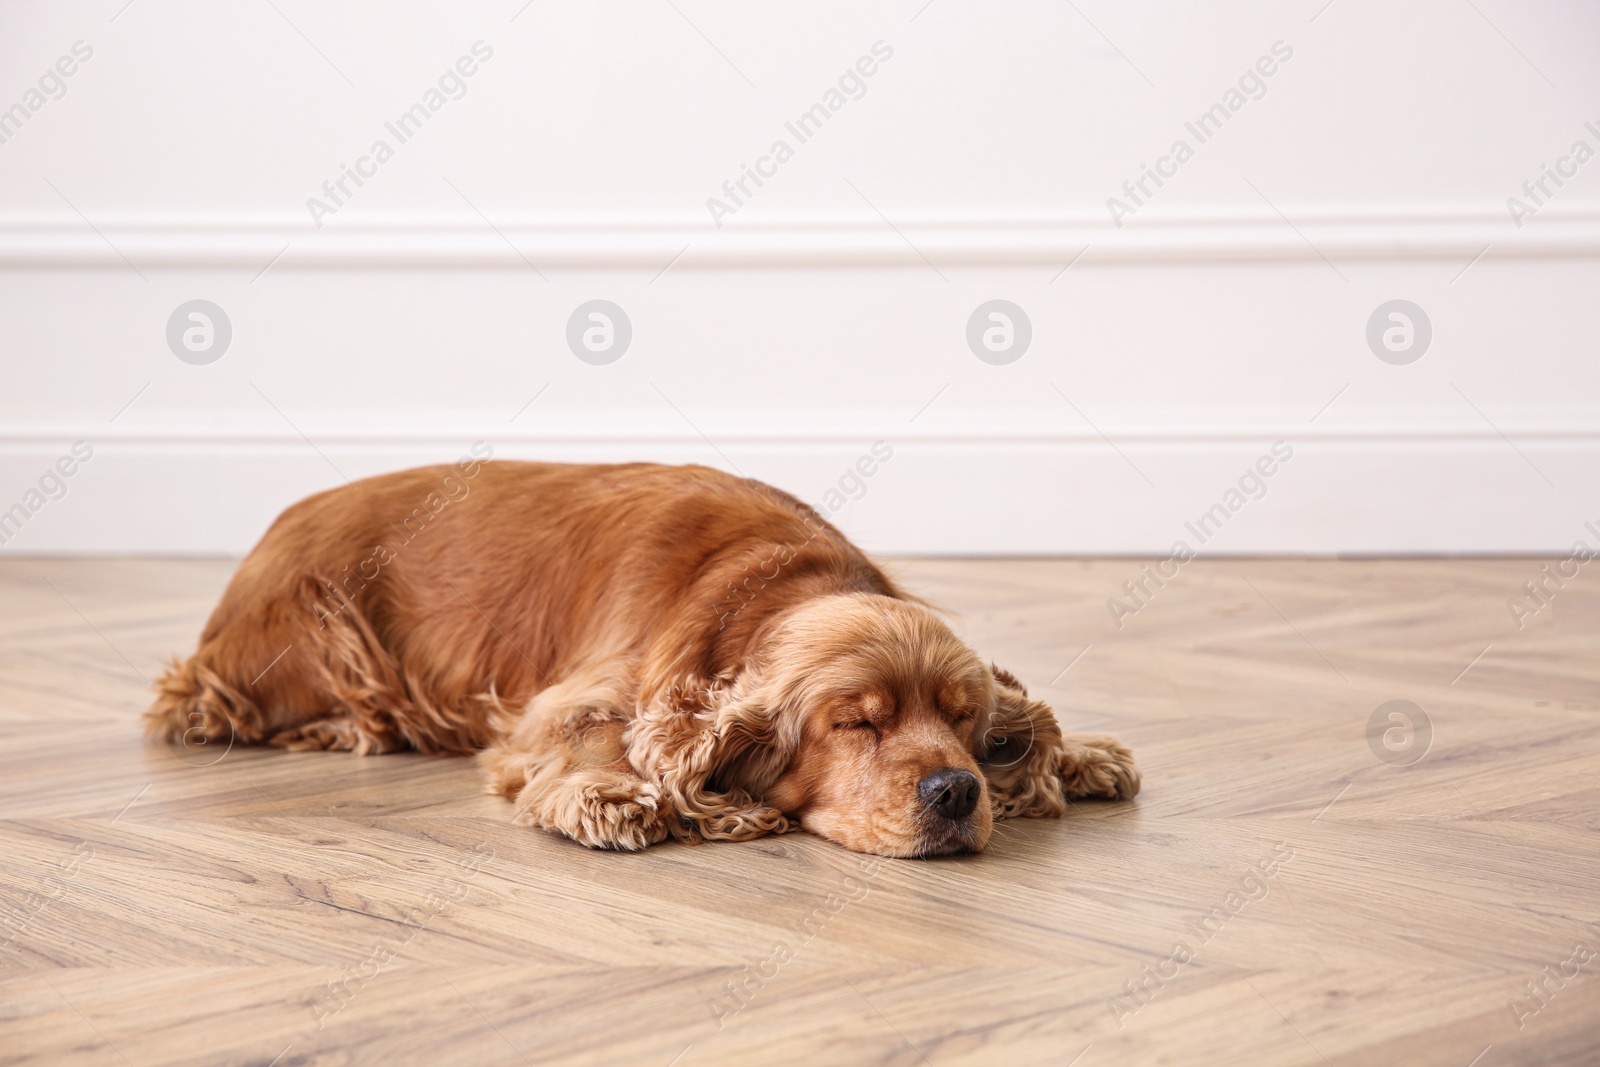 Photo of Cute Cocker Spaniel dog lying on warm floor indoors. Heating system